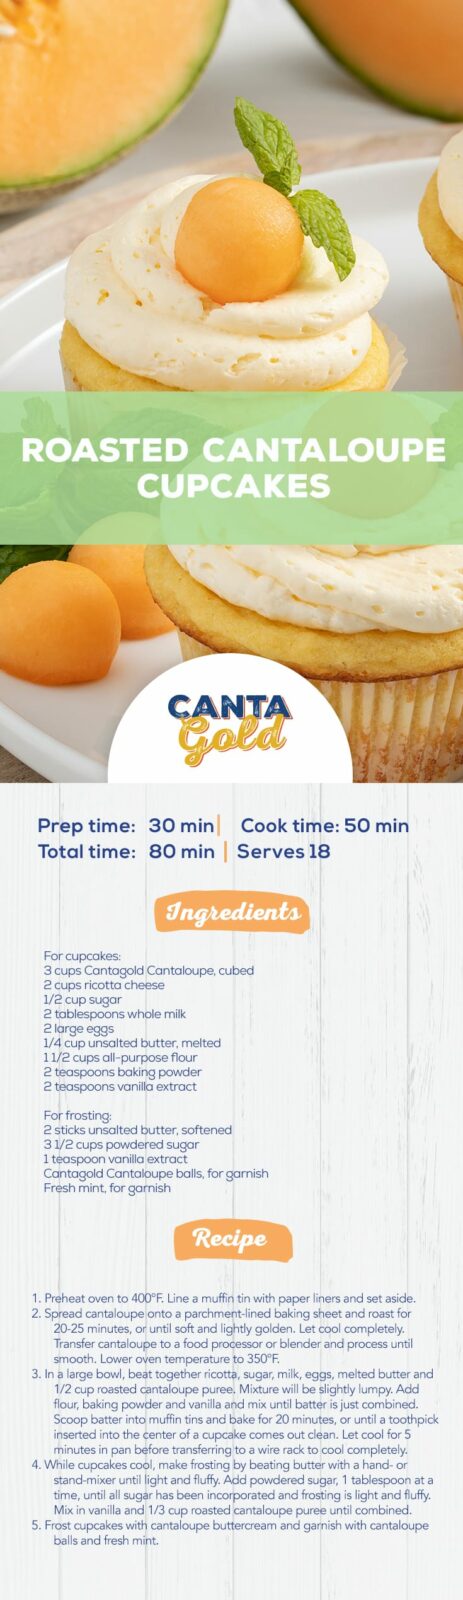 CantaGold_PinterestPinPinterest_Roasted Cantaloupe Cupcakes